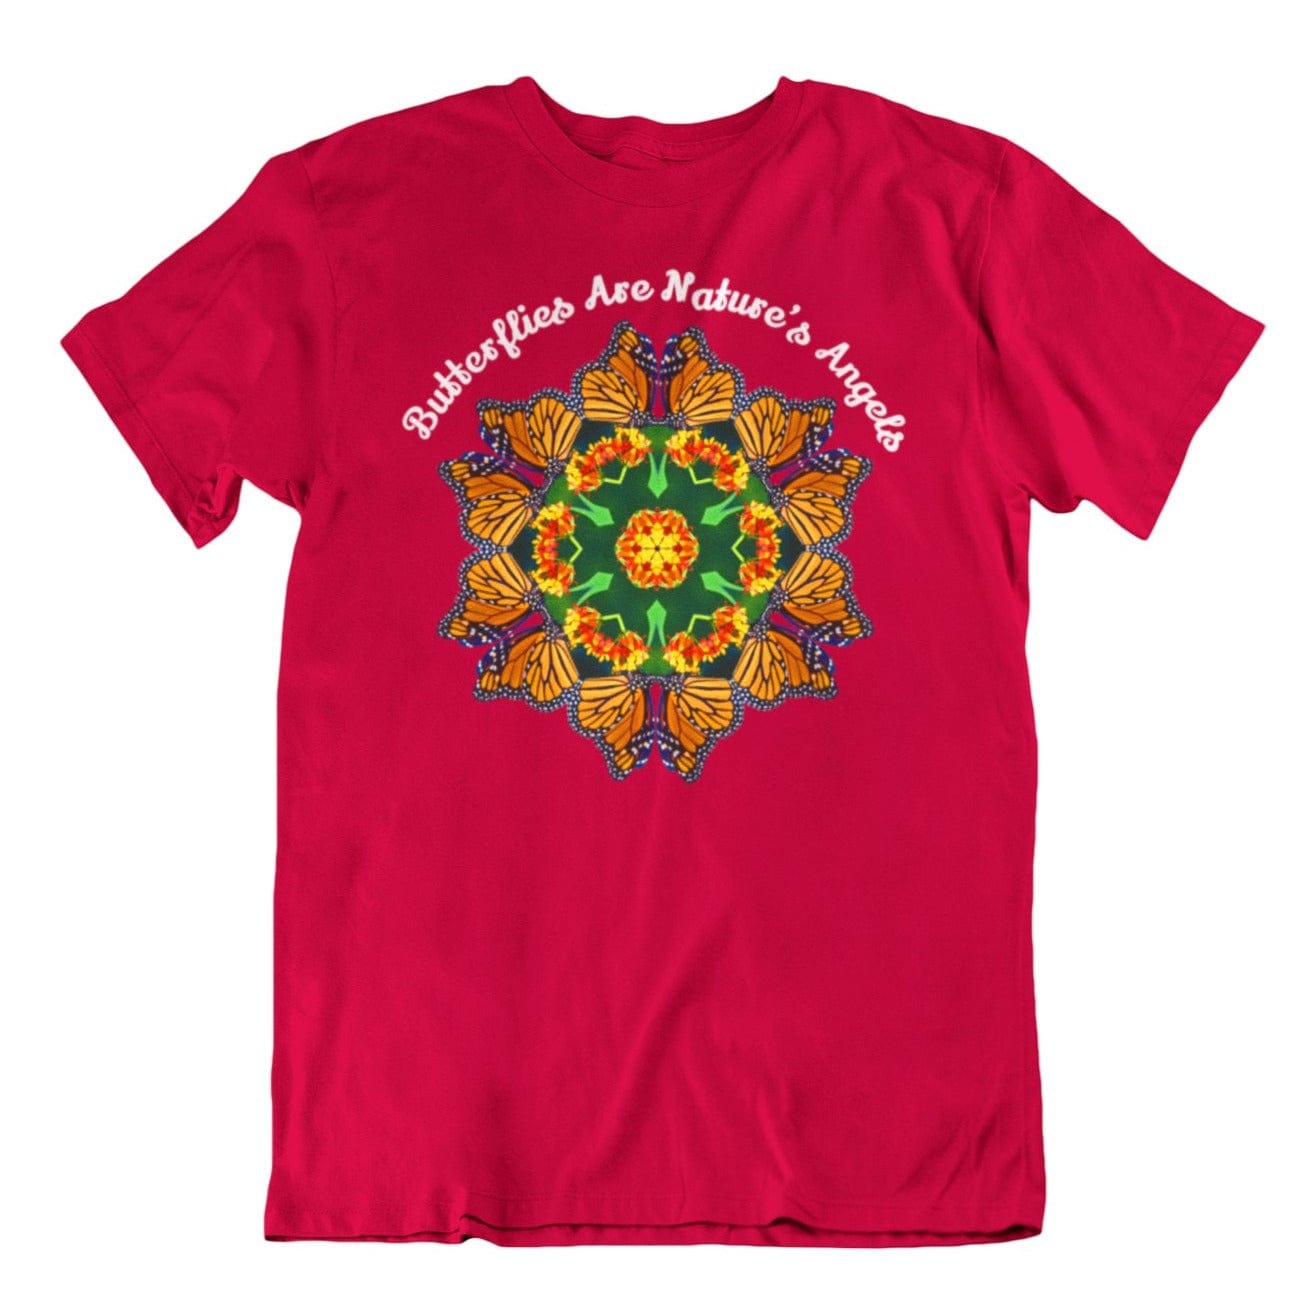 Butterfly Top, Zen Mystical Poet Shirt, Cottage Core Bug, Shirt, Best Selling Shirts, Insect Shirt, Cute Shirts Teens & Women Yoga Shirt 7